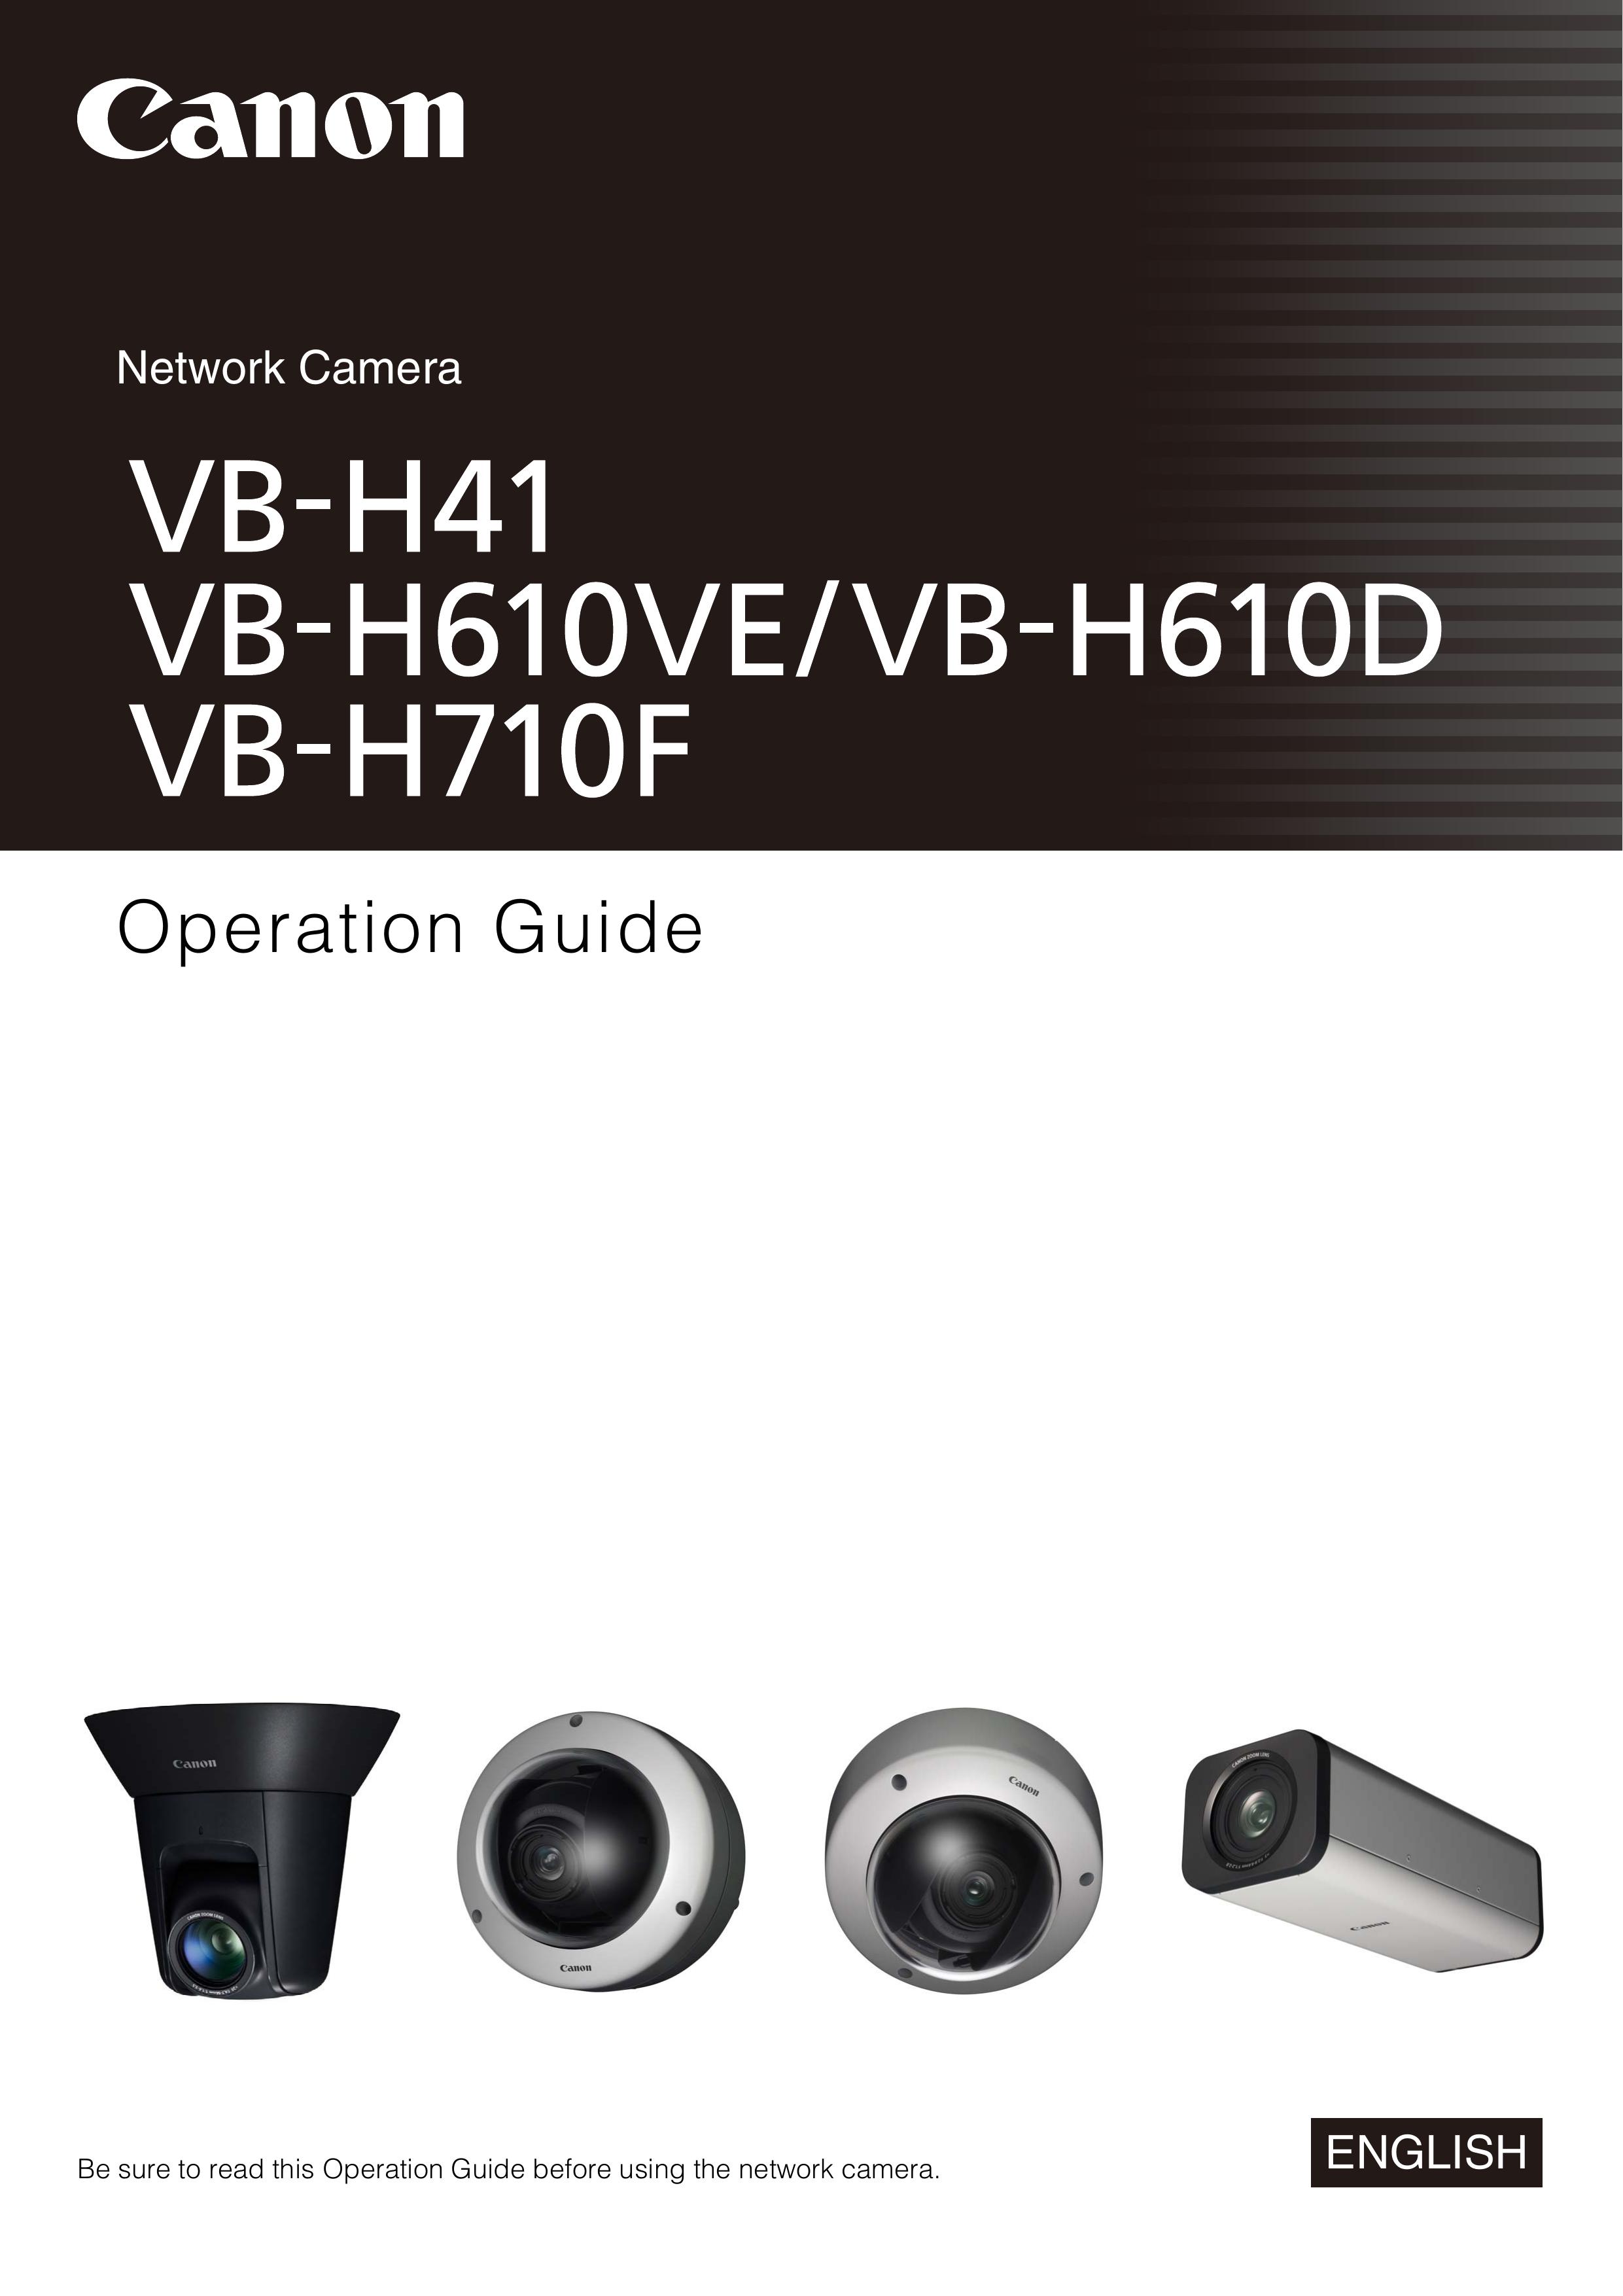 Canon VB-H610D Security Camera User Manual